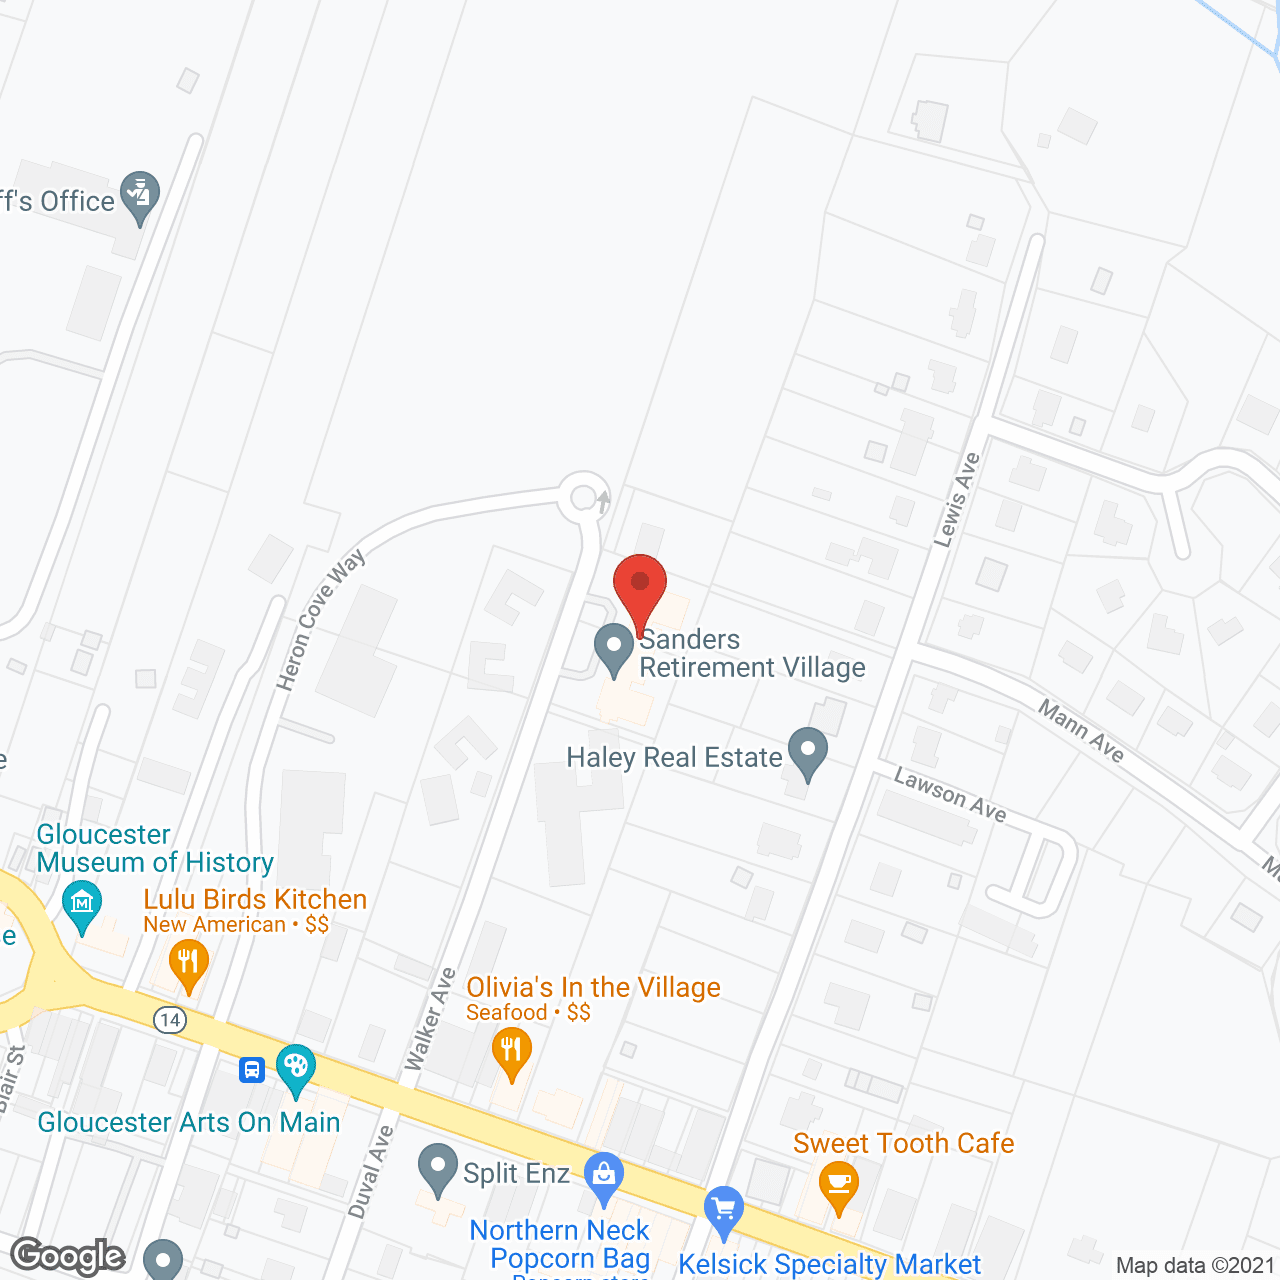 Sanders Retirement Village in google map